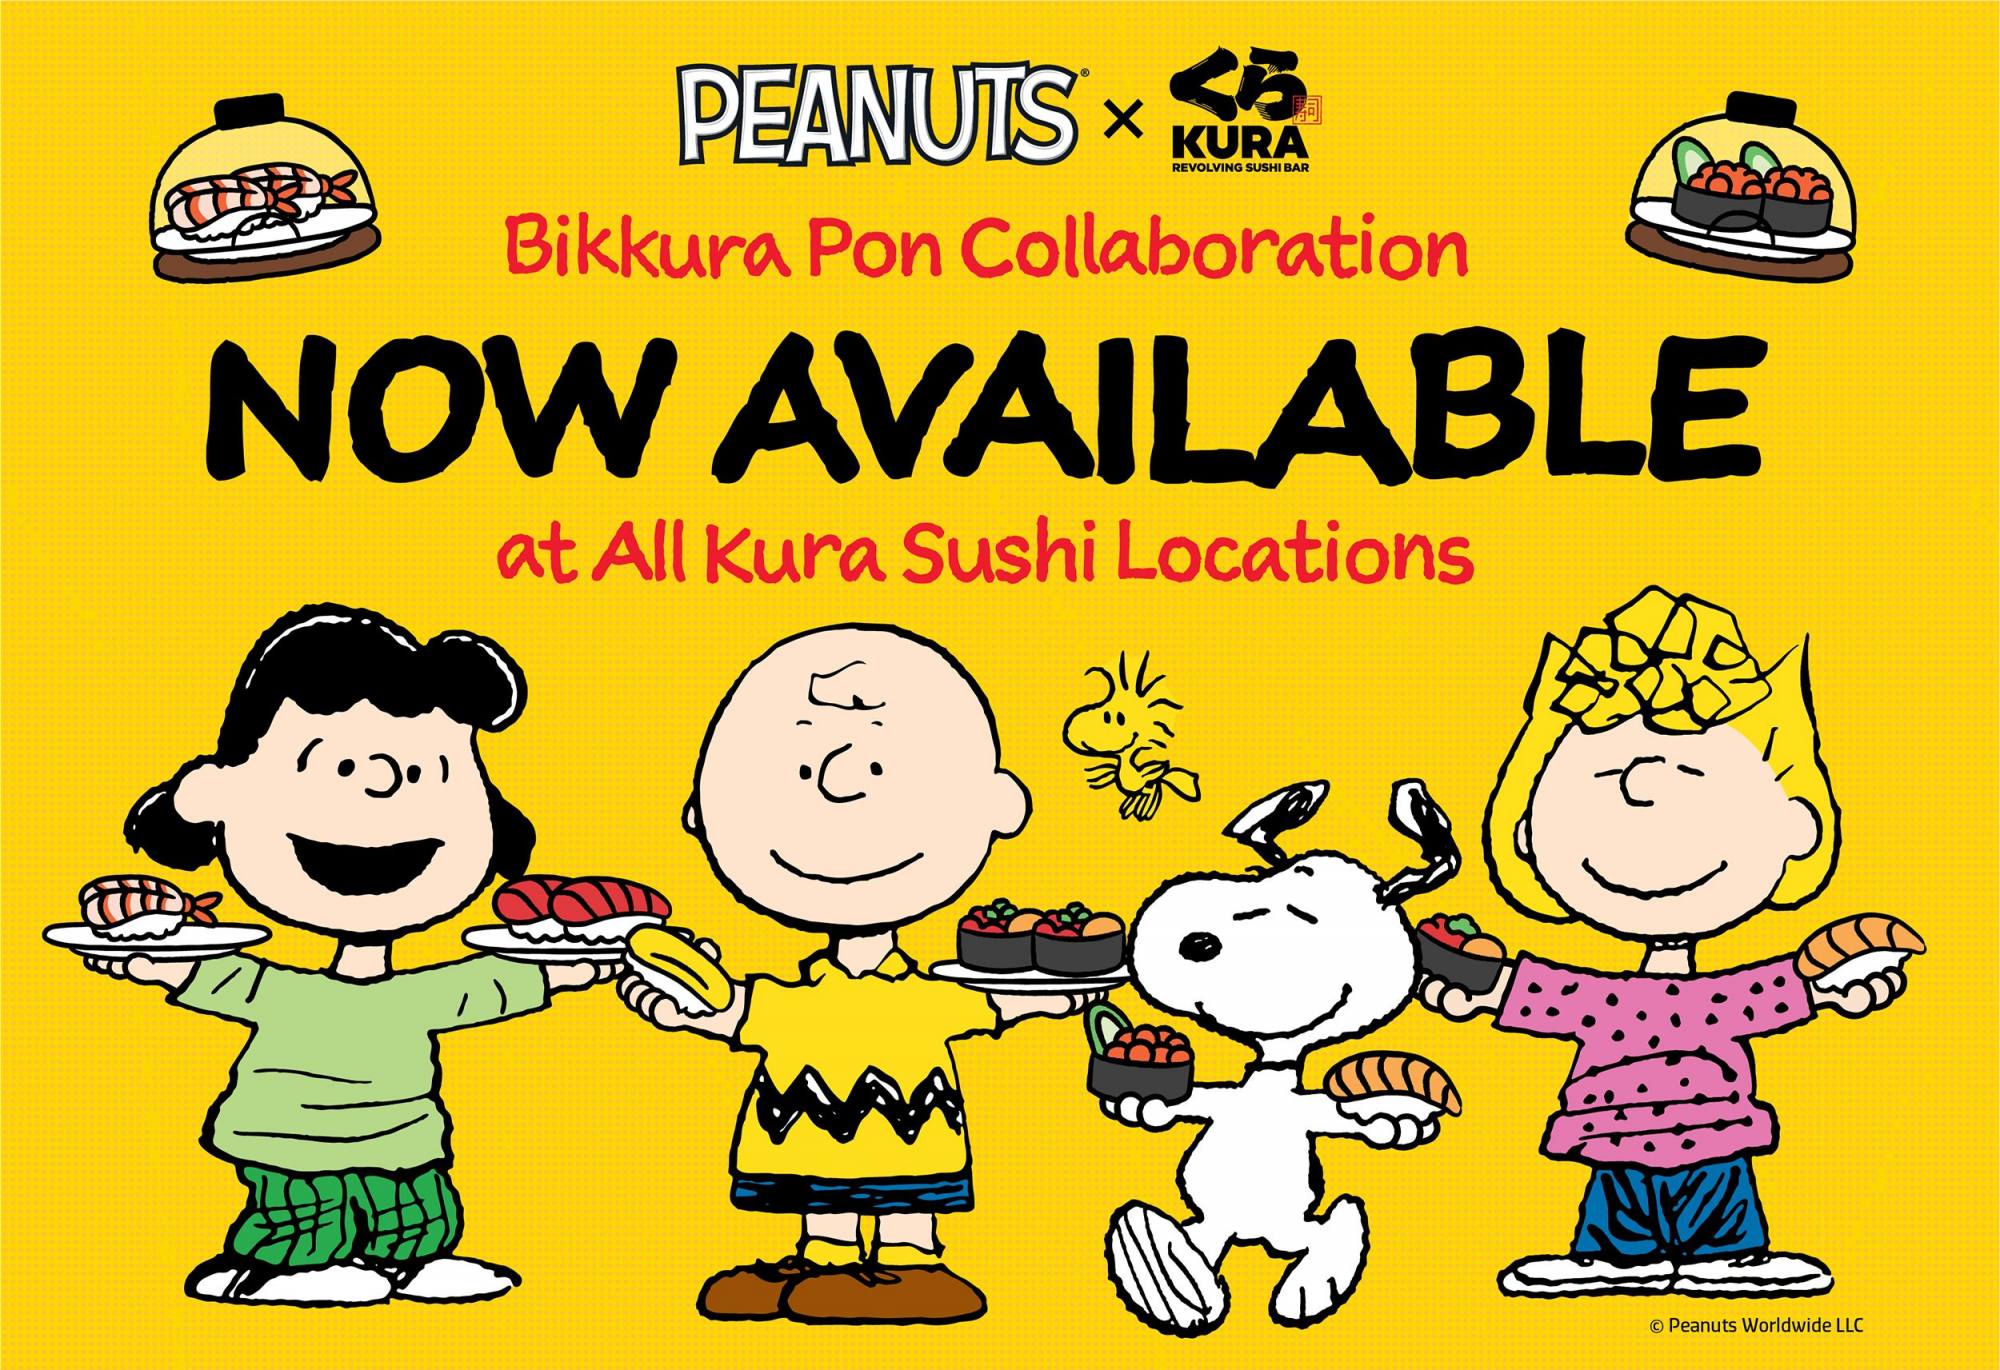 Peanuts™ x Kura Sushi Bikkura Pon Collaboration